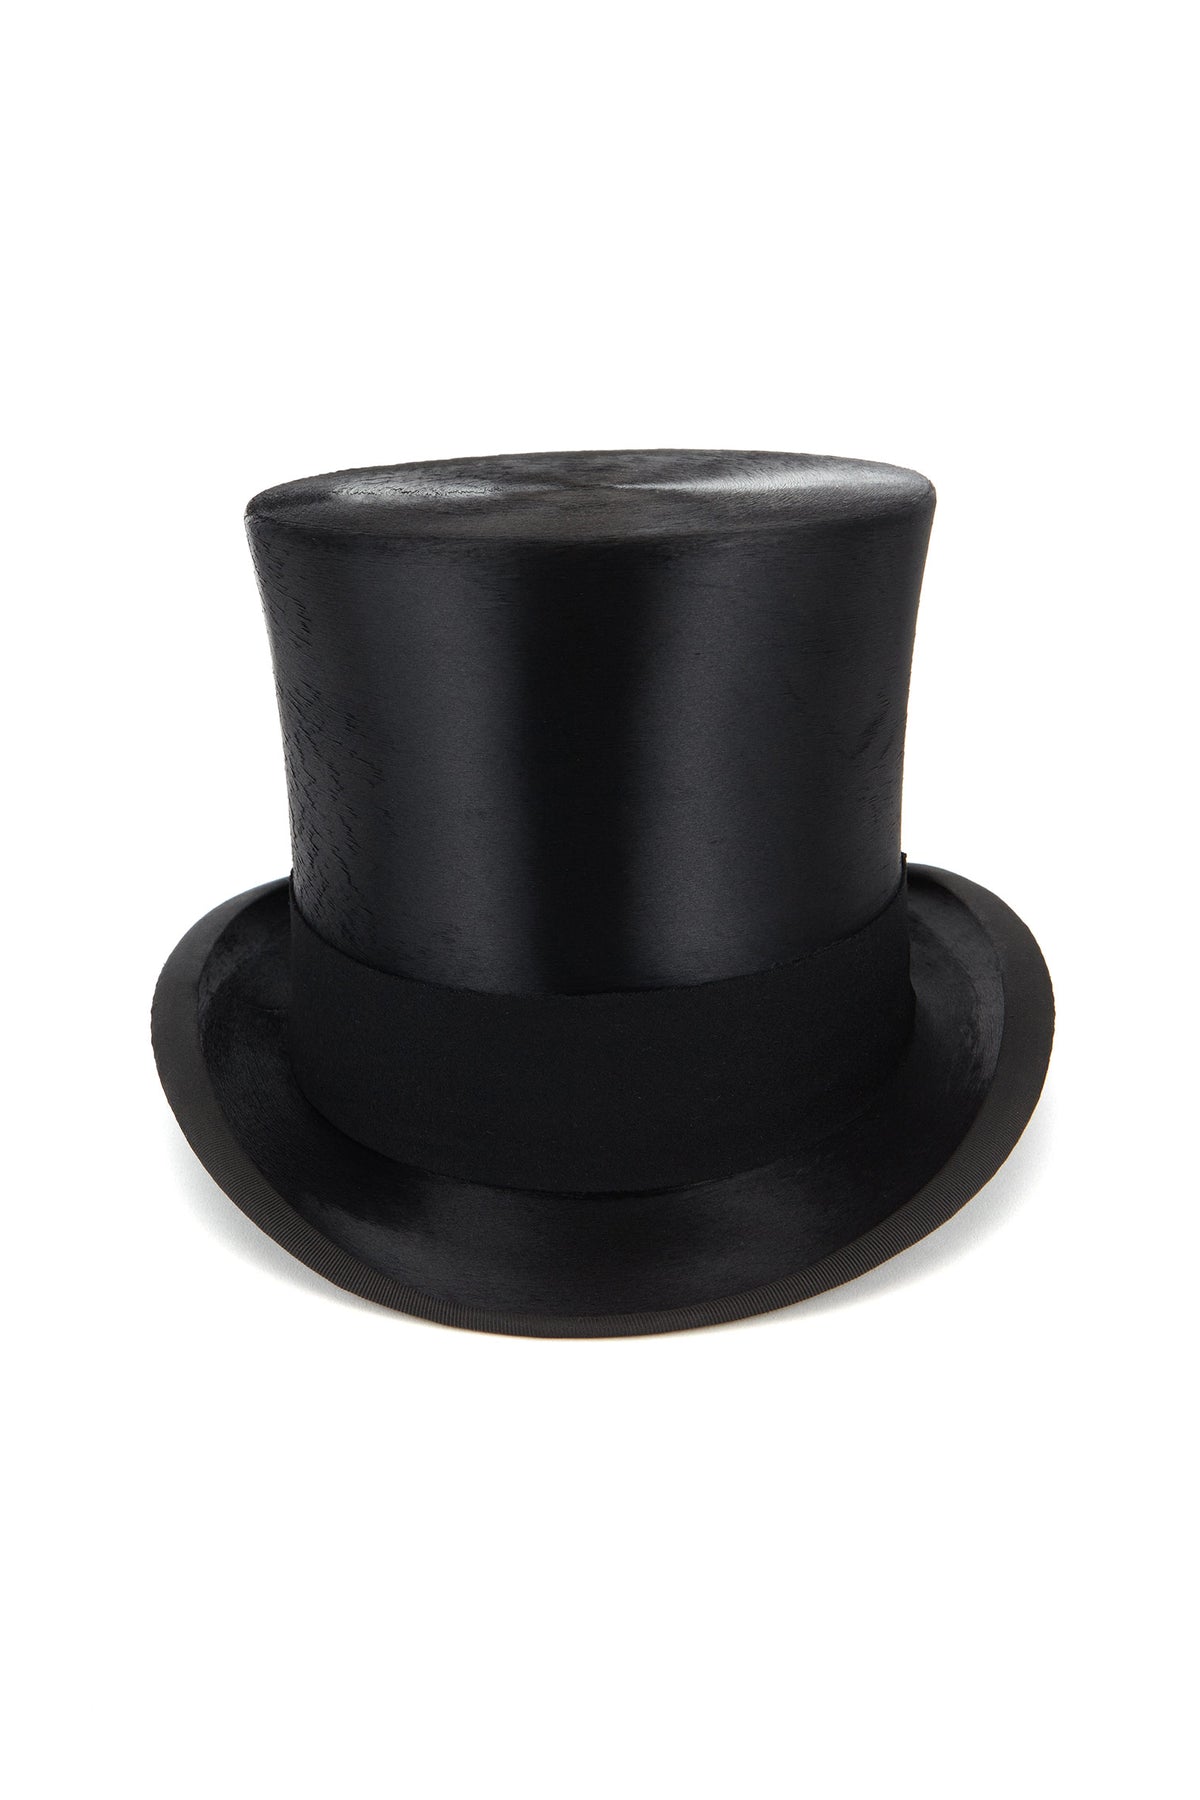 Black Silk Top Hat - Lock & Co. Hats for Men & Women top hat